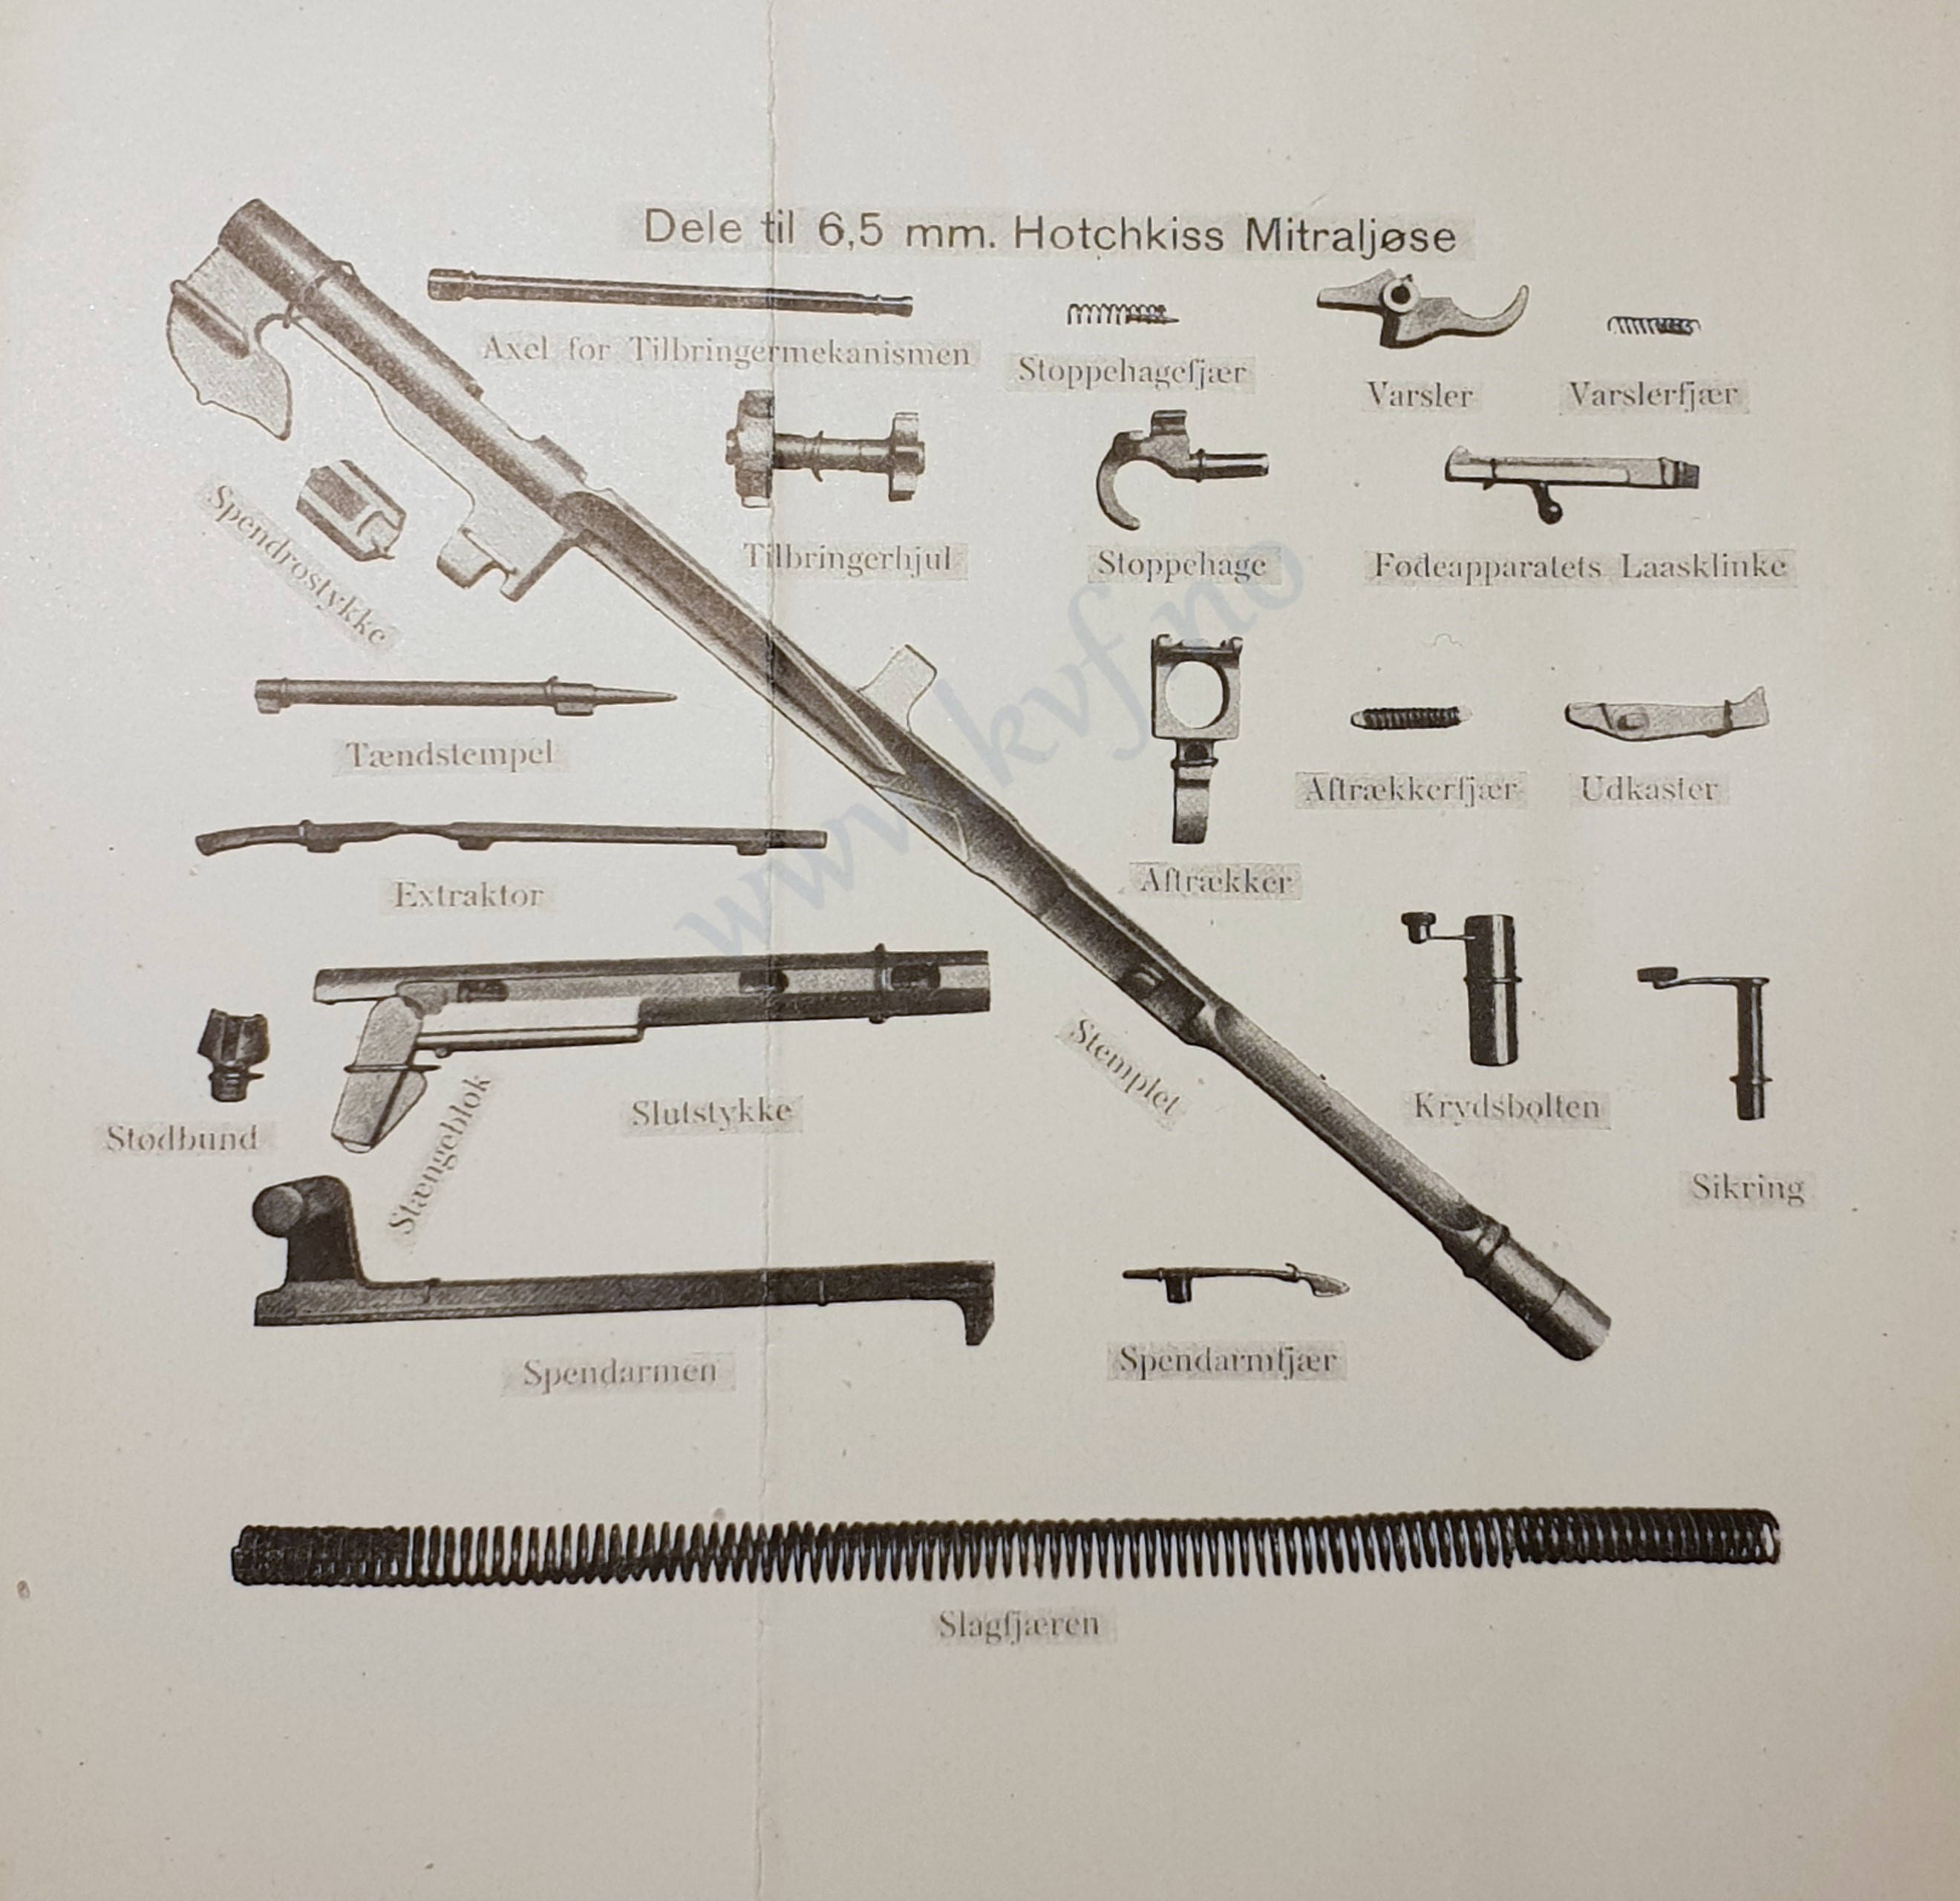 ./guns/mg/bilder/MG-Kongsberg-Hotchkiss-M98-kal65-Fra1900-1.jpg